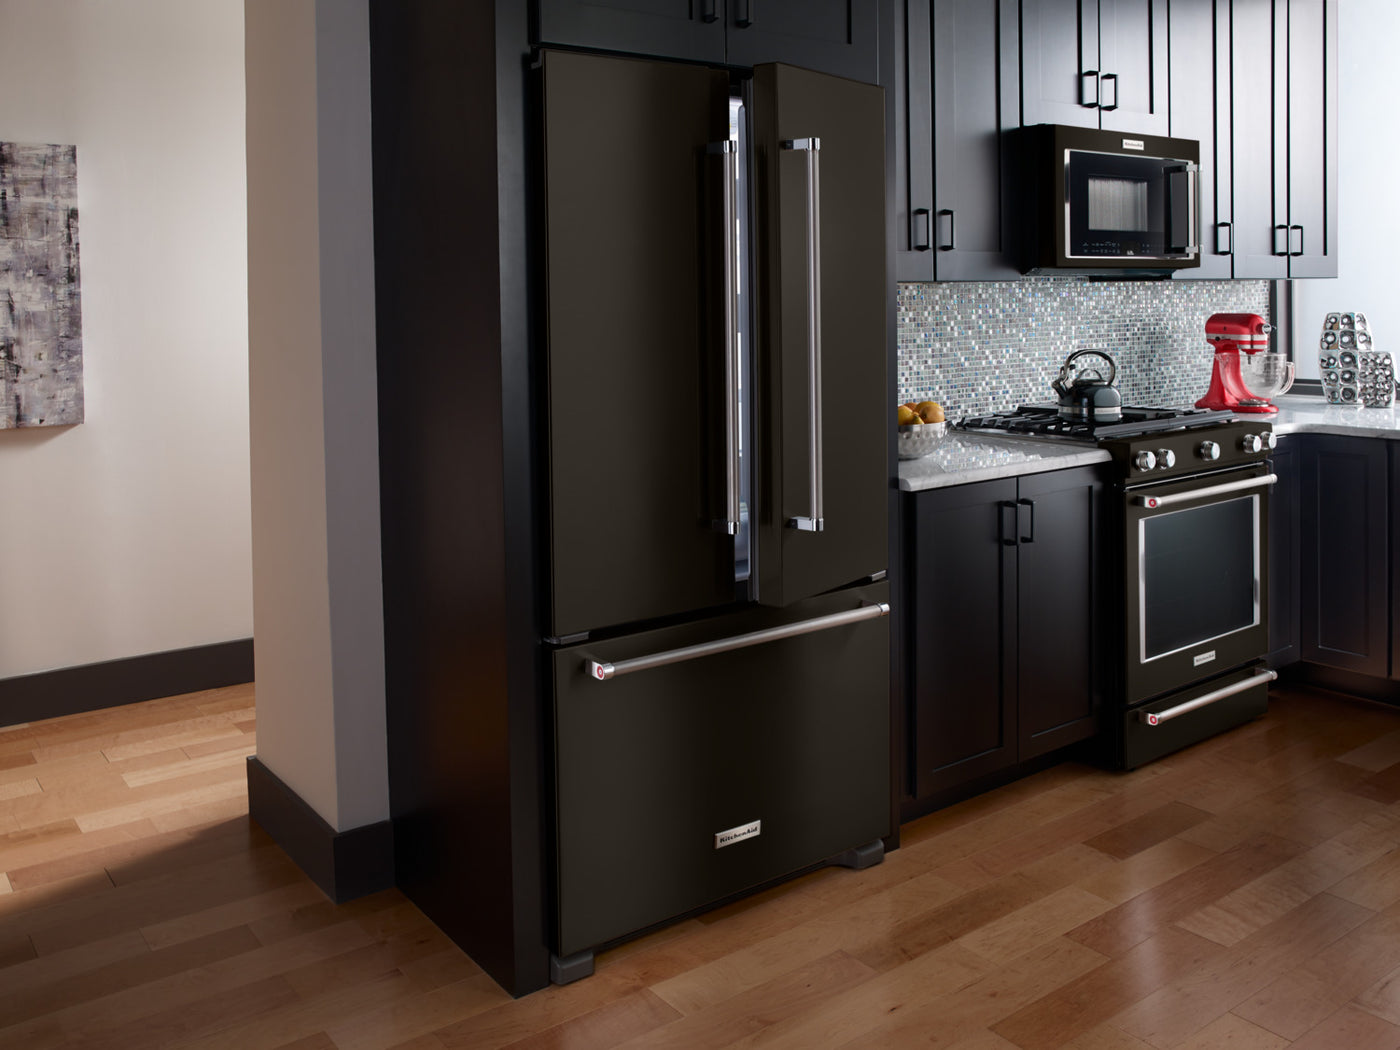 KitchenAid Black Stainless Steel Counter-Depth French Door Refrigerator (21.9 Cu. Ft.) - KRFC302EBS